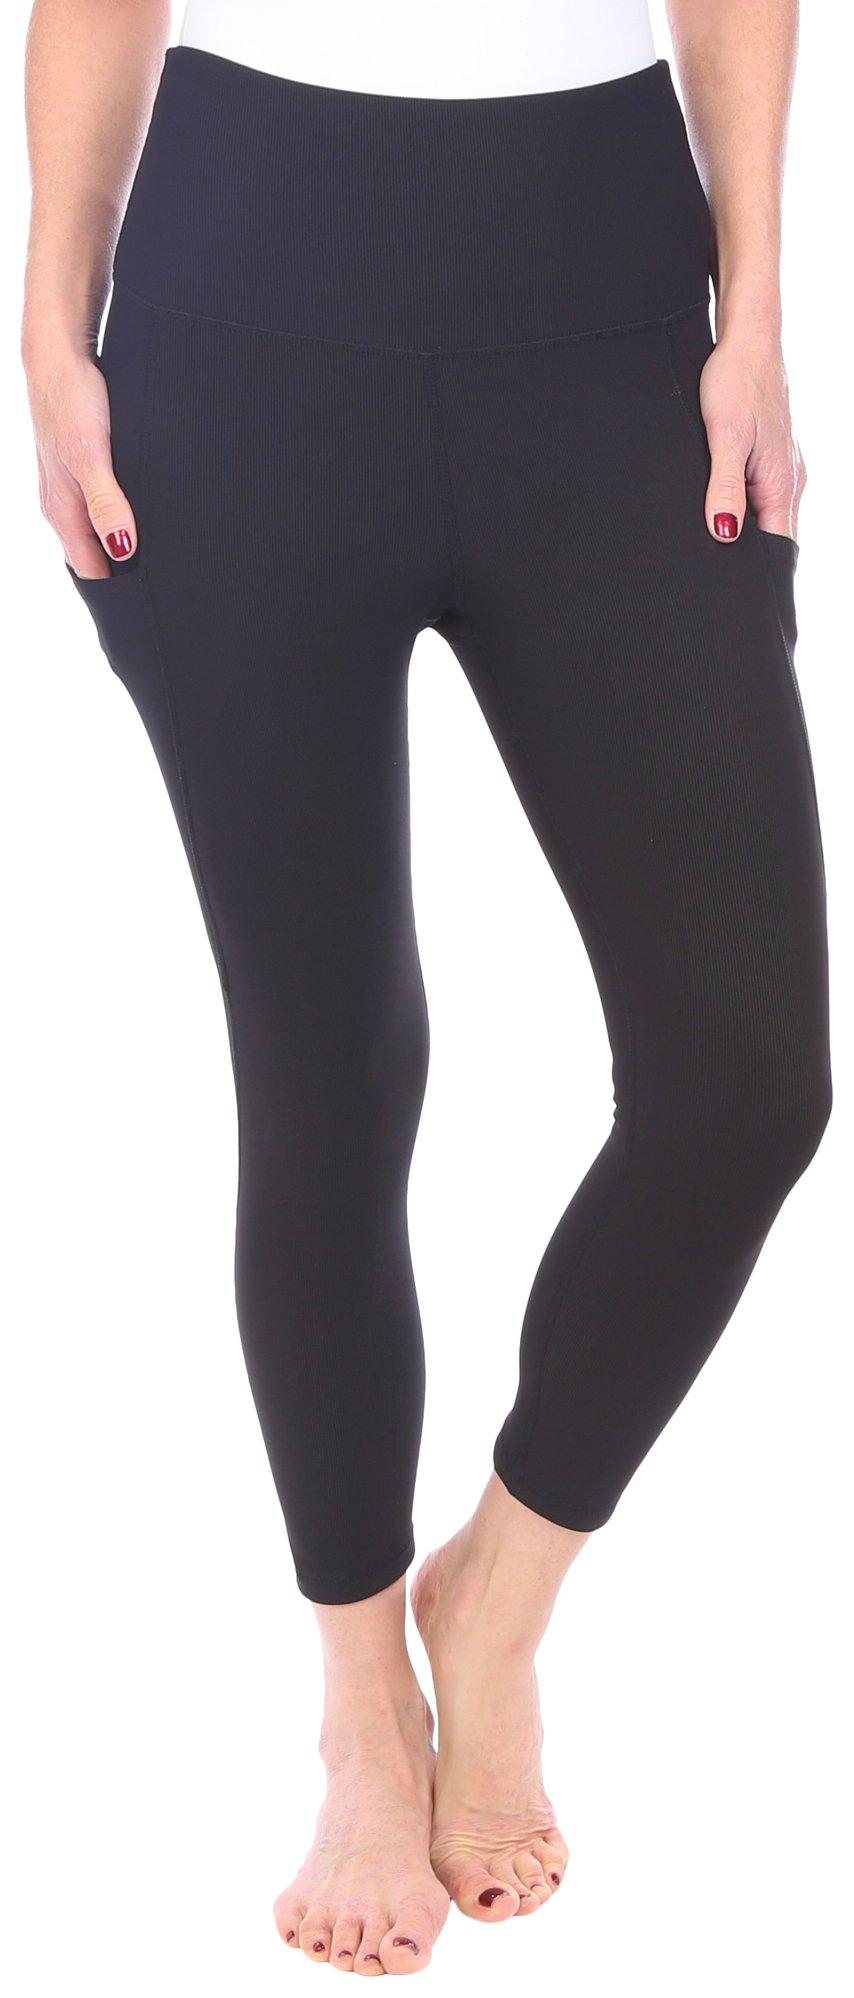 Vogo Activewear Capri Performance Legging - Women's - Clothing